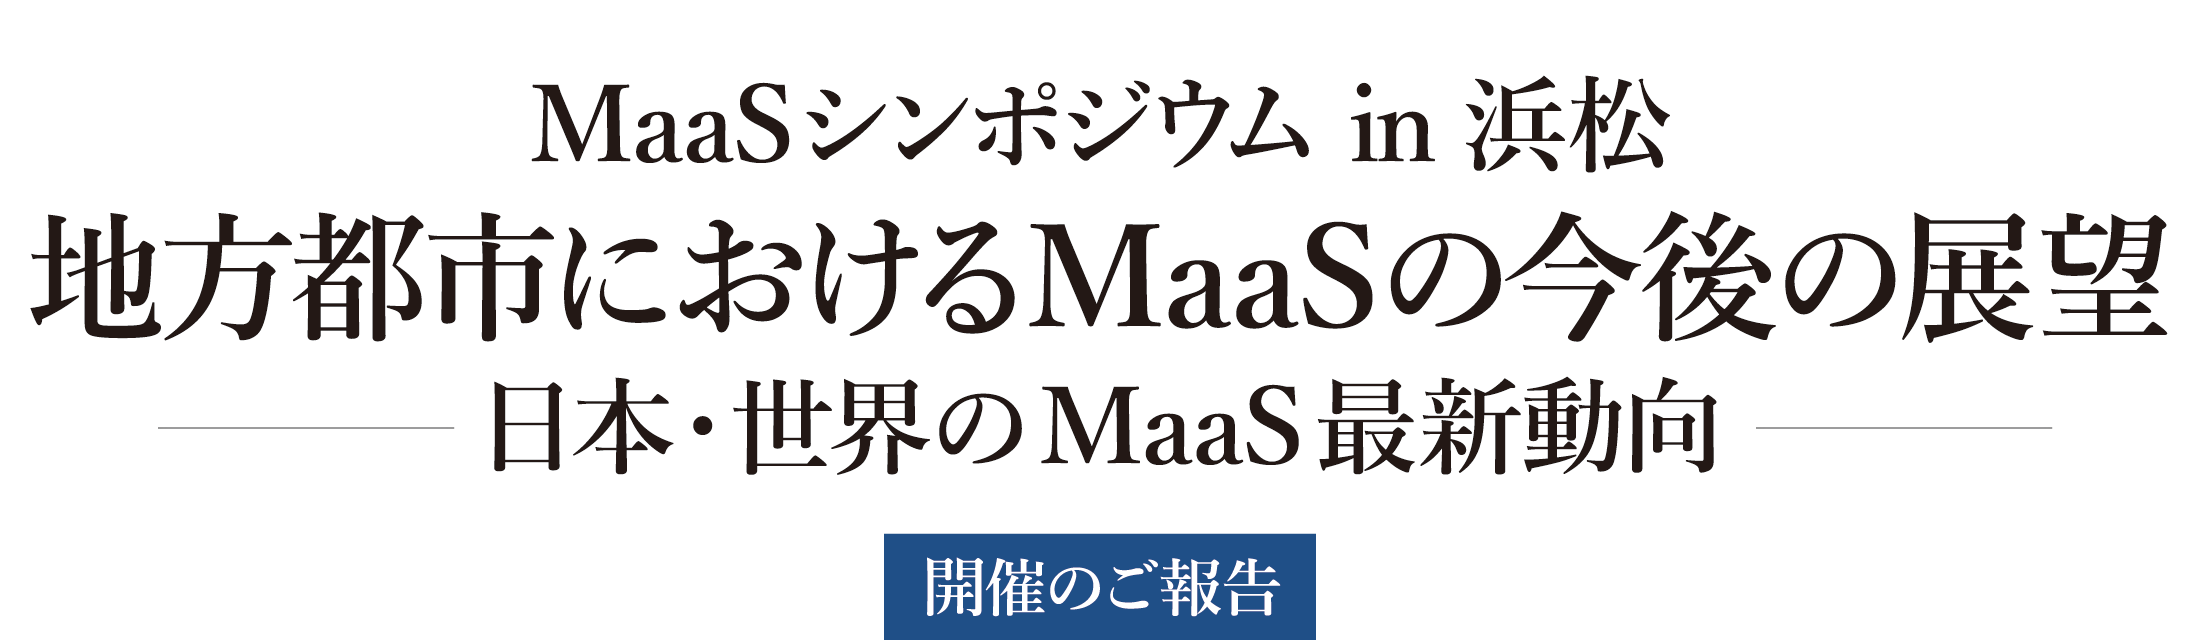 MaaSシンポジウム in 浜松 地方都市におけるMaaSの今後の展望 ～日本・世界のMaaS最新動向～